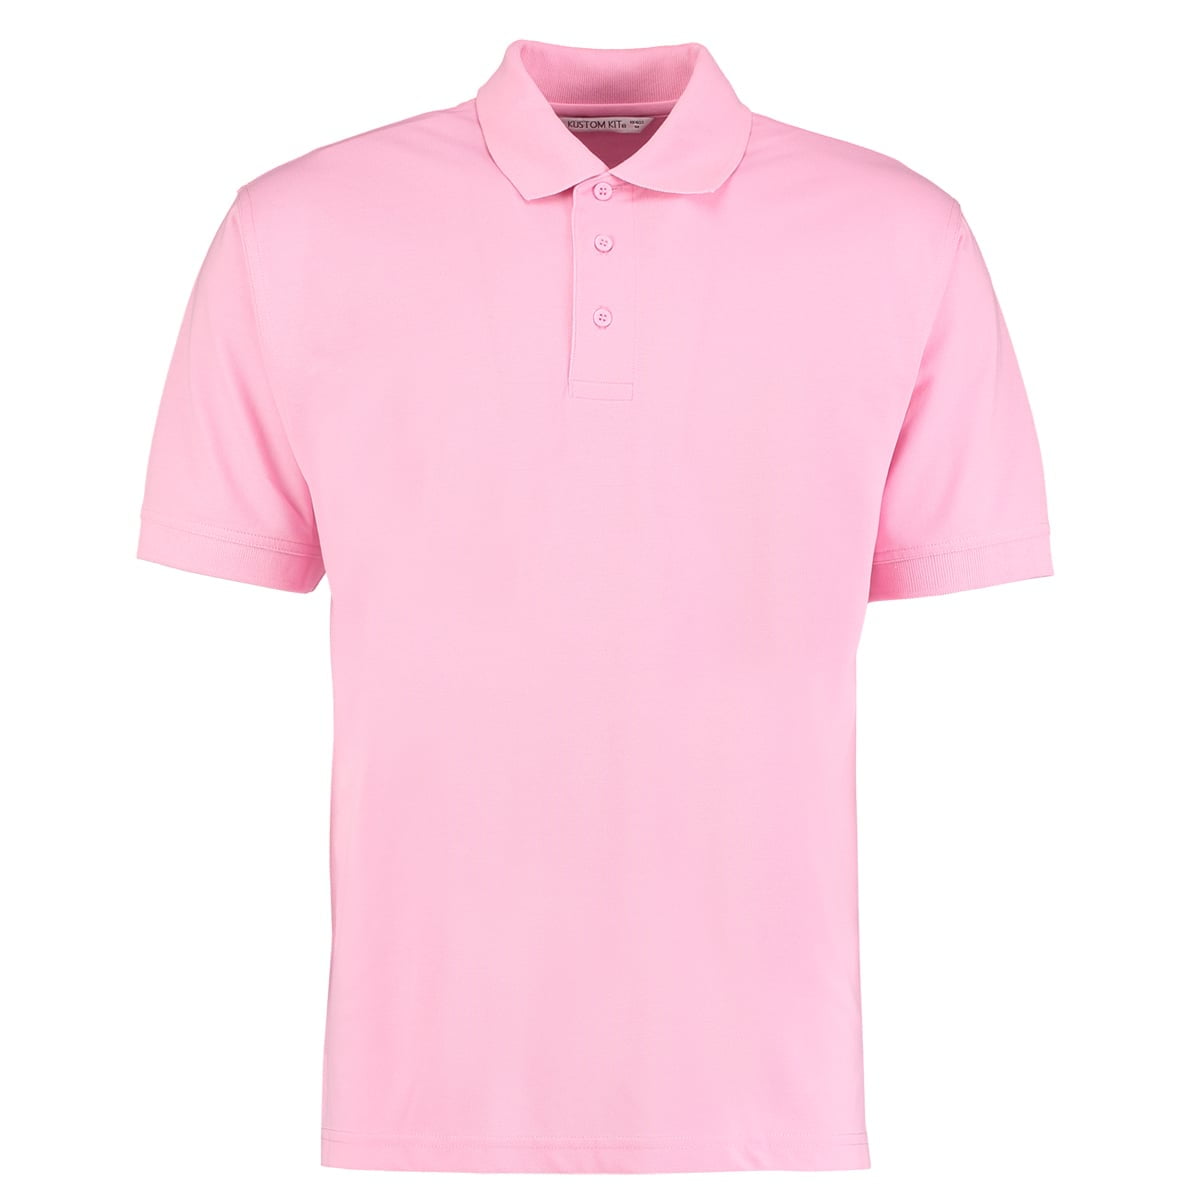 Pink - Robocza koszulka polo Superwash 60°